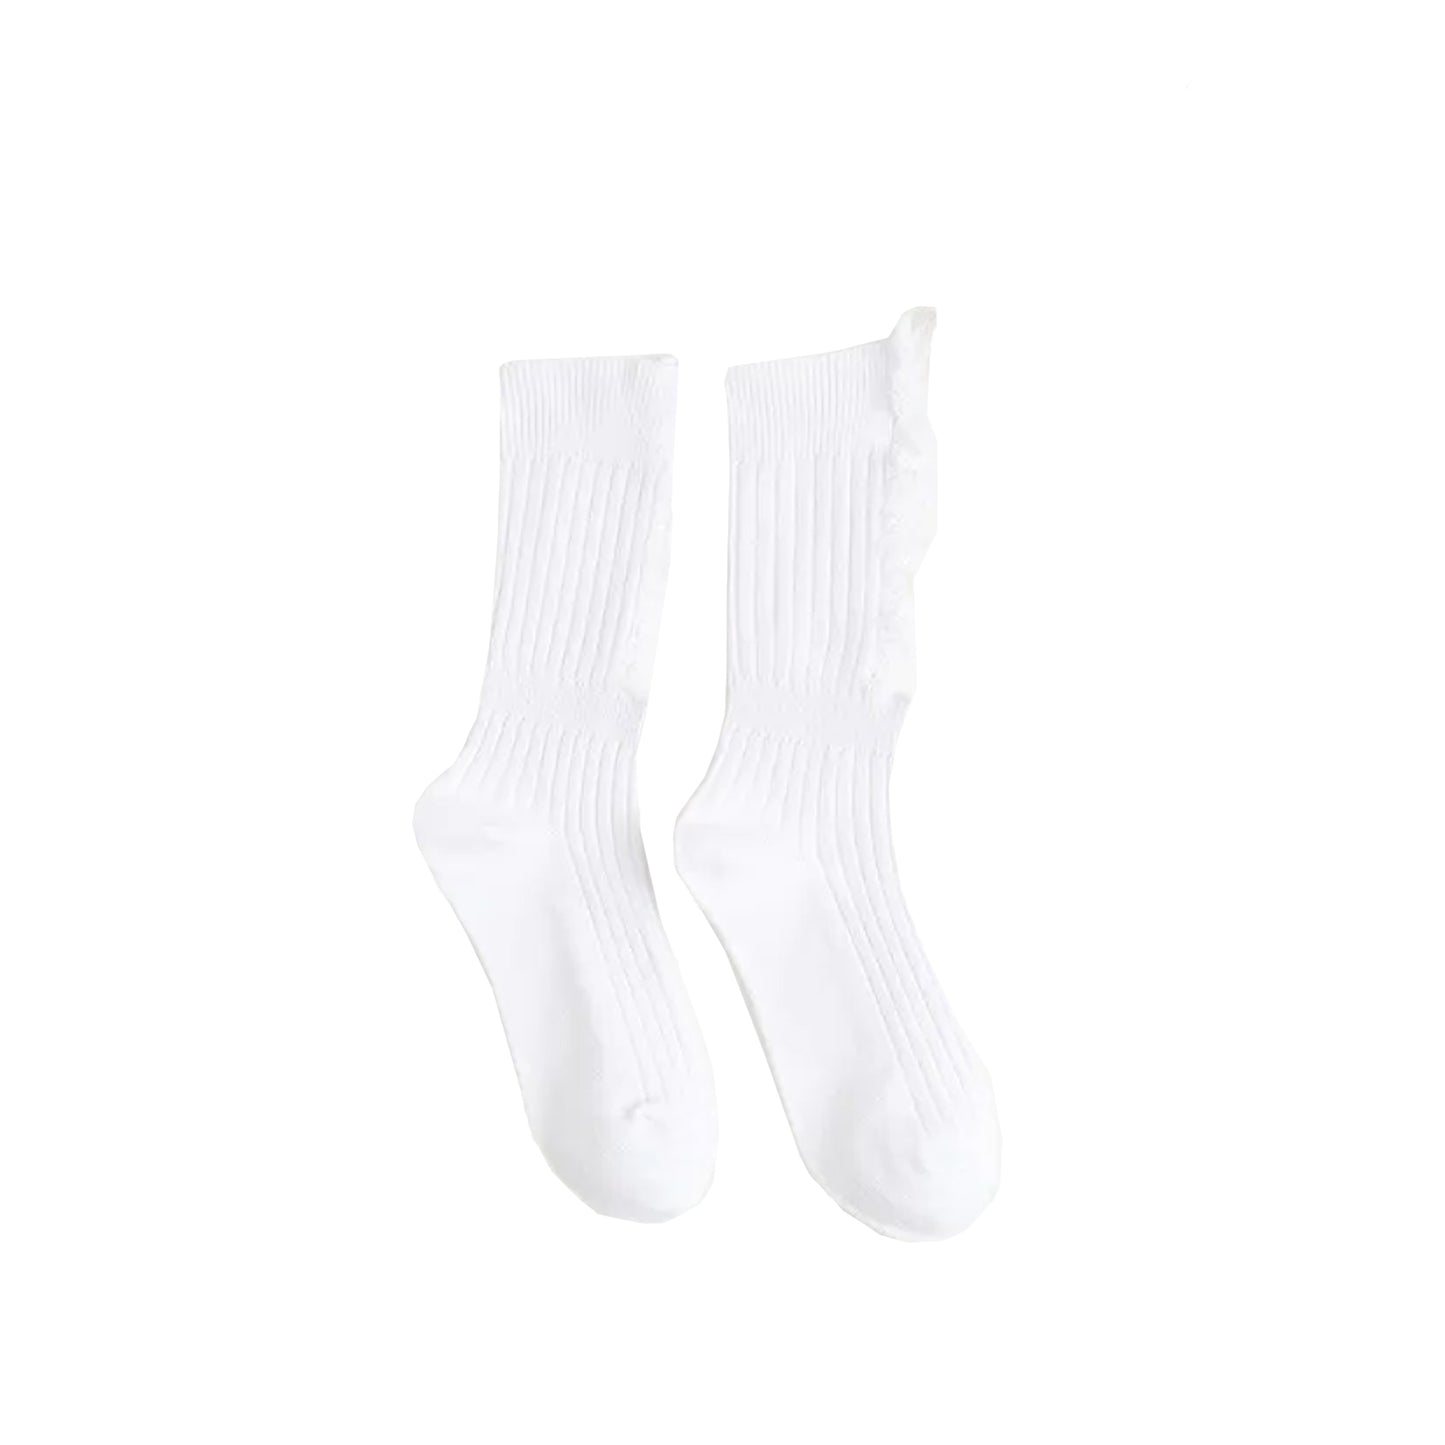 FLOOF Women's Distressed Socks in White